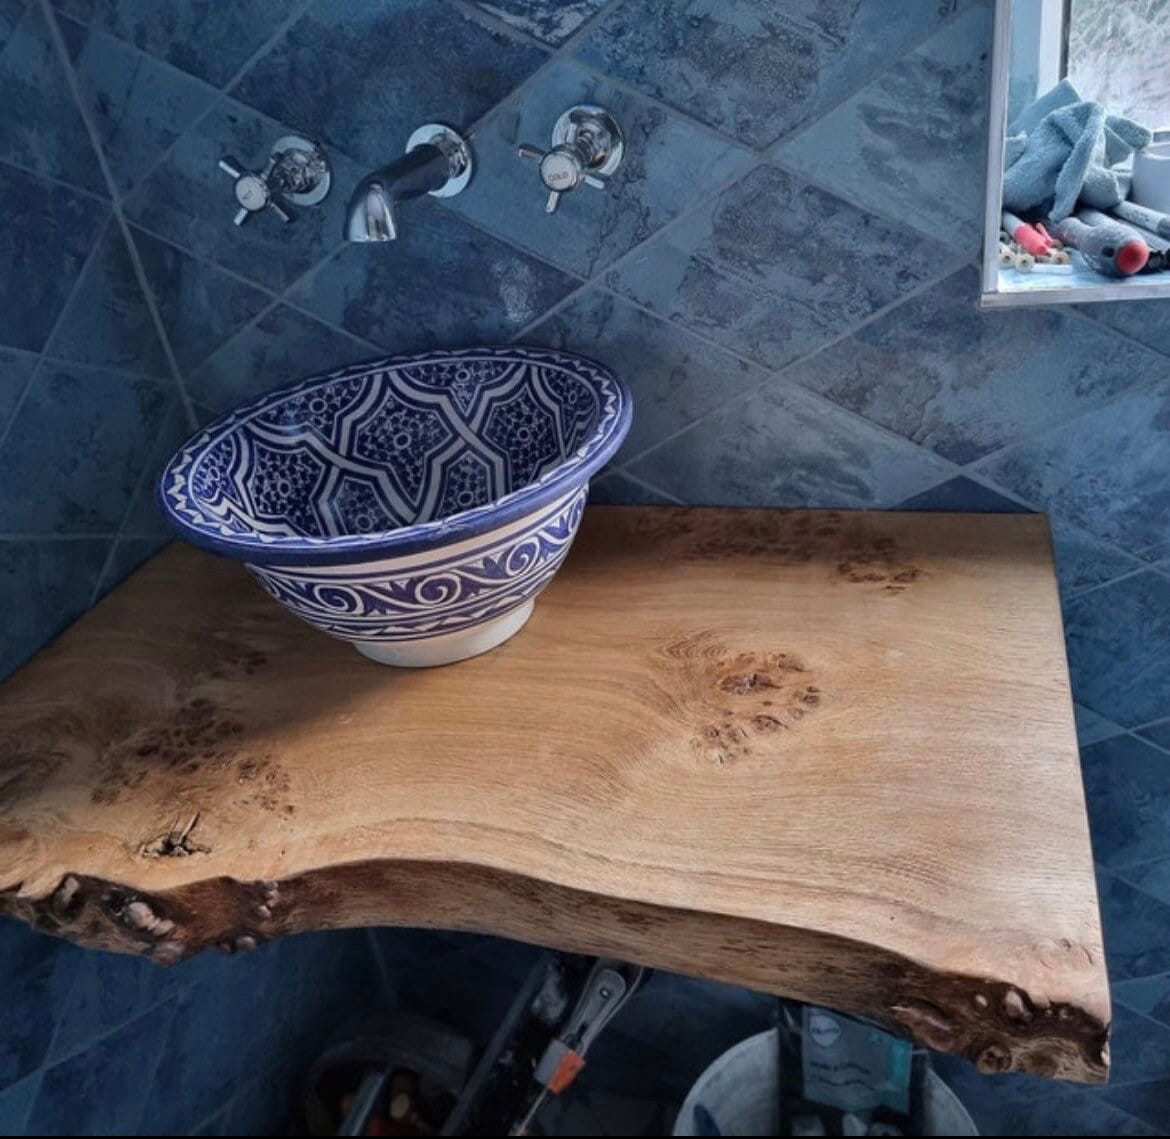 Live Edge Bathroom Vanity Shelf, Pippy Oak Solid Wood Character